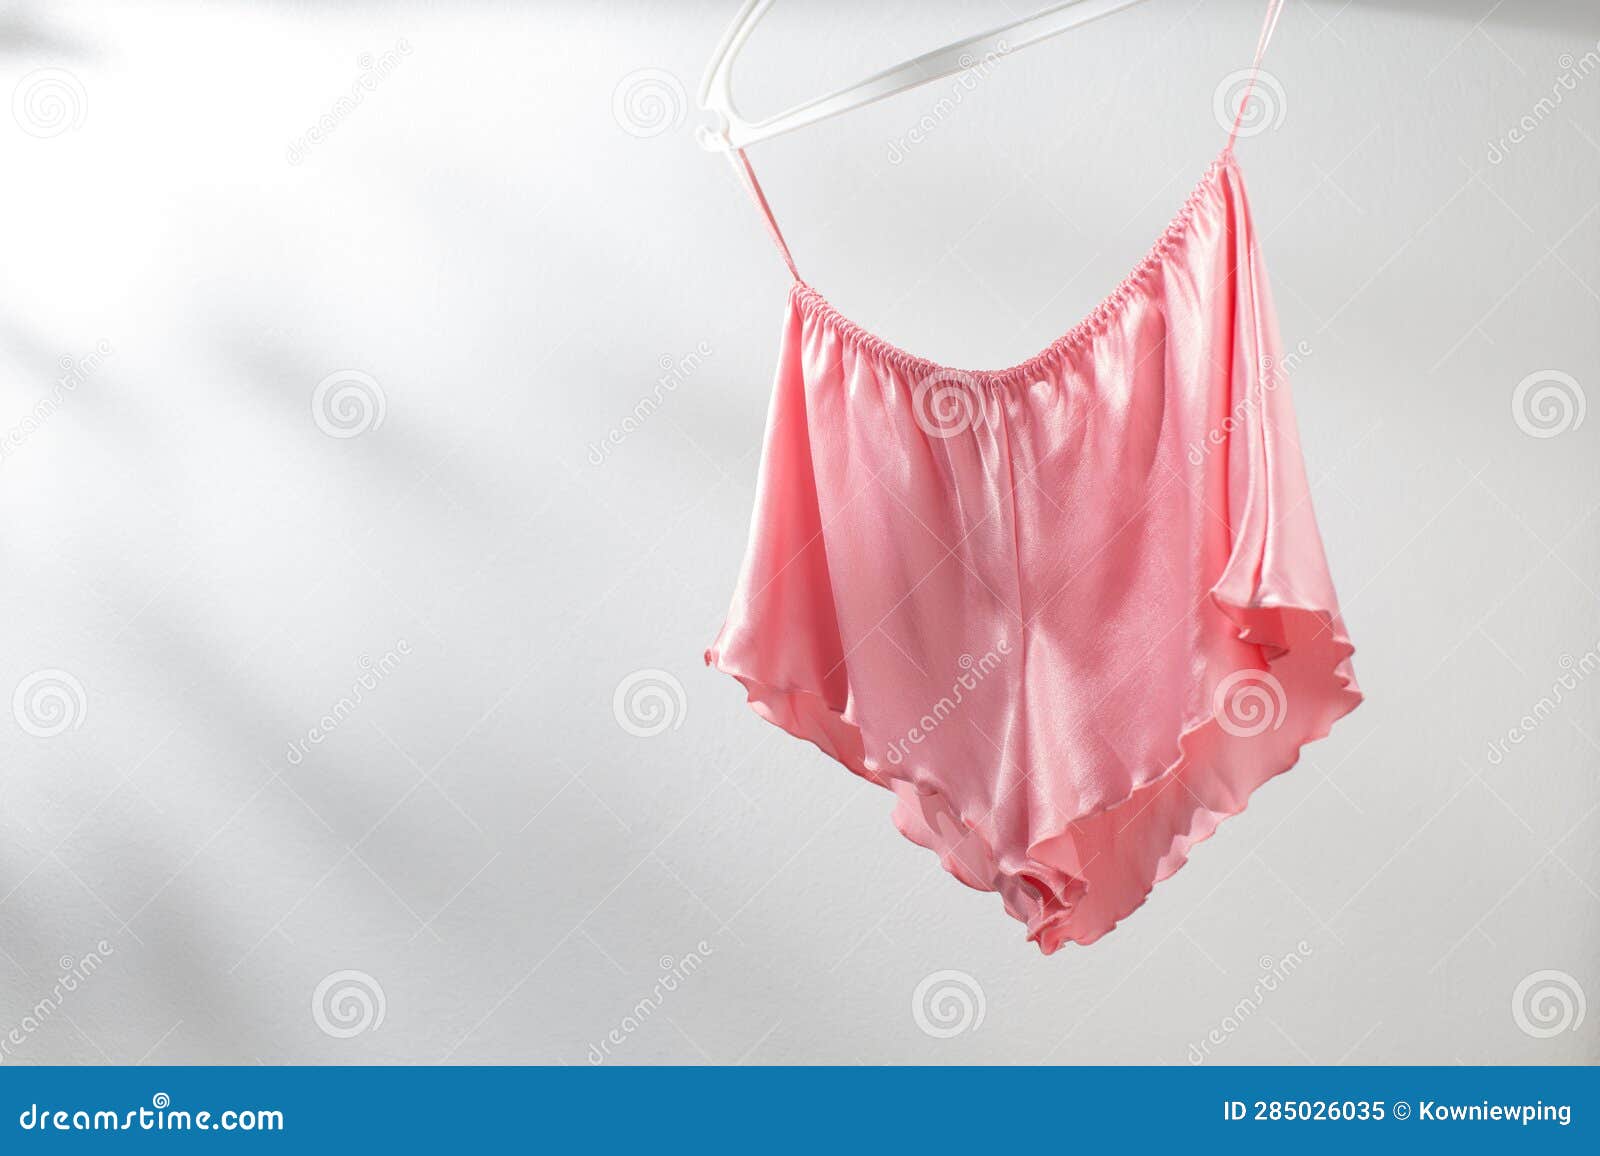 Pink Satin Women S Pajama Pants Stock Image - Image of shorts, copy ...